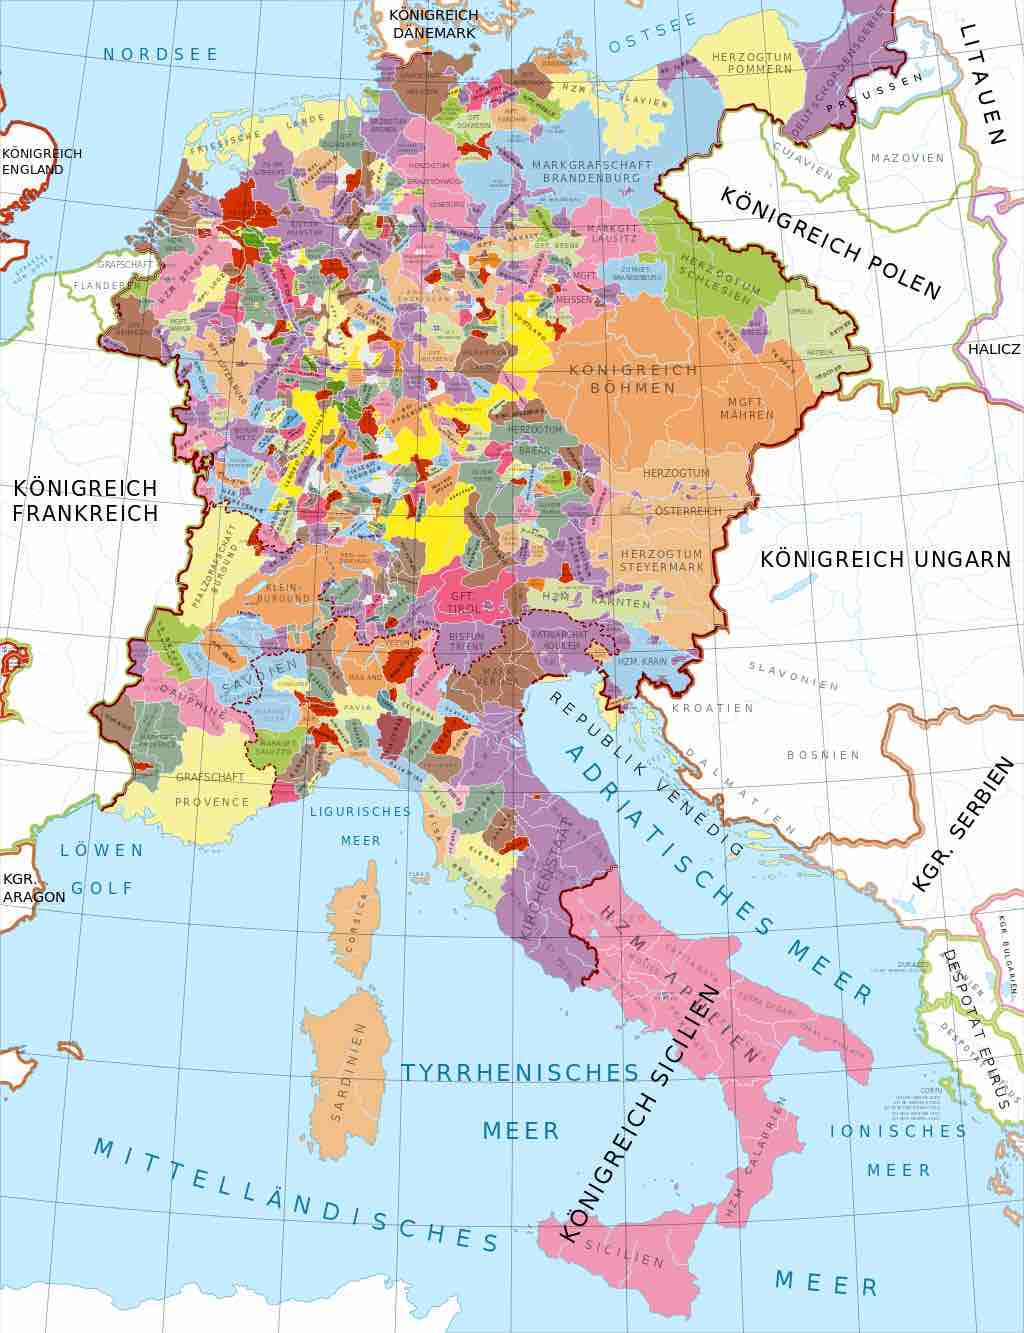 The Holy Roman Empire, 12th century